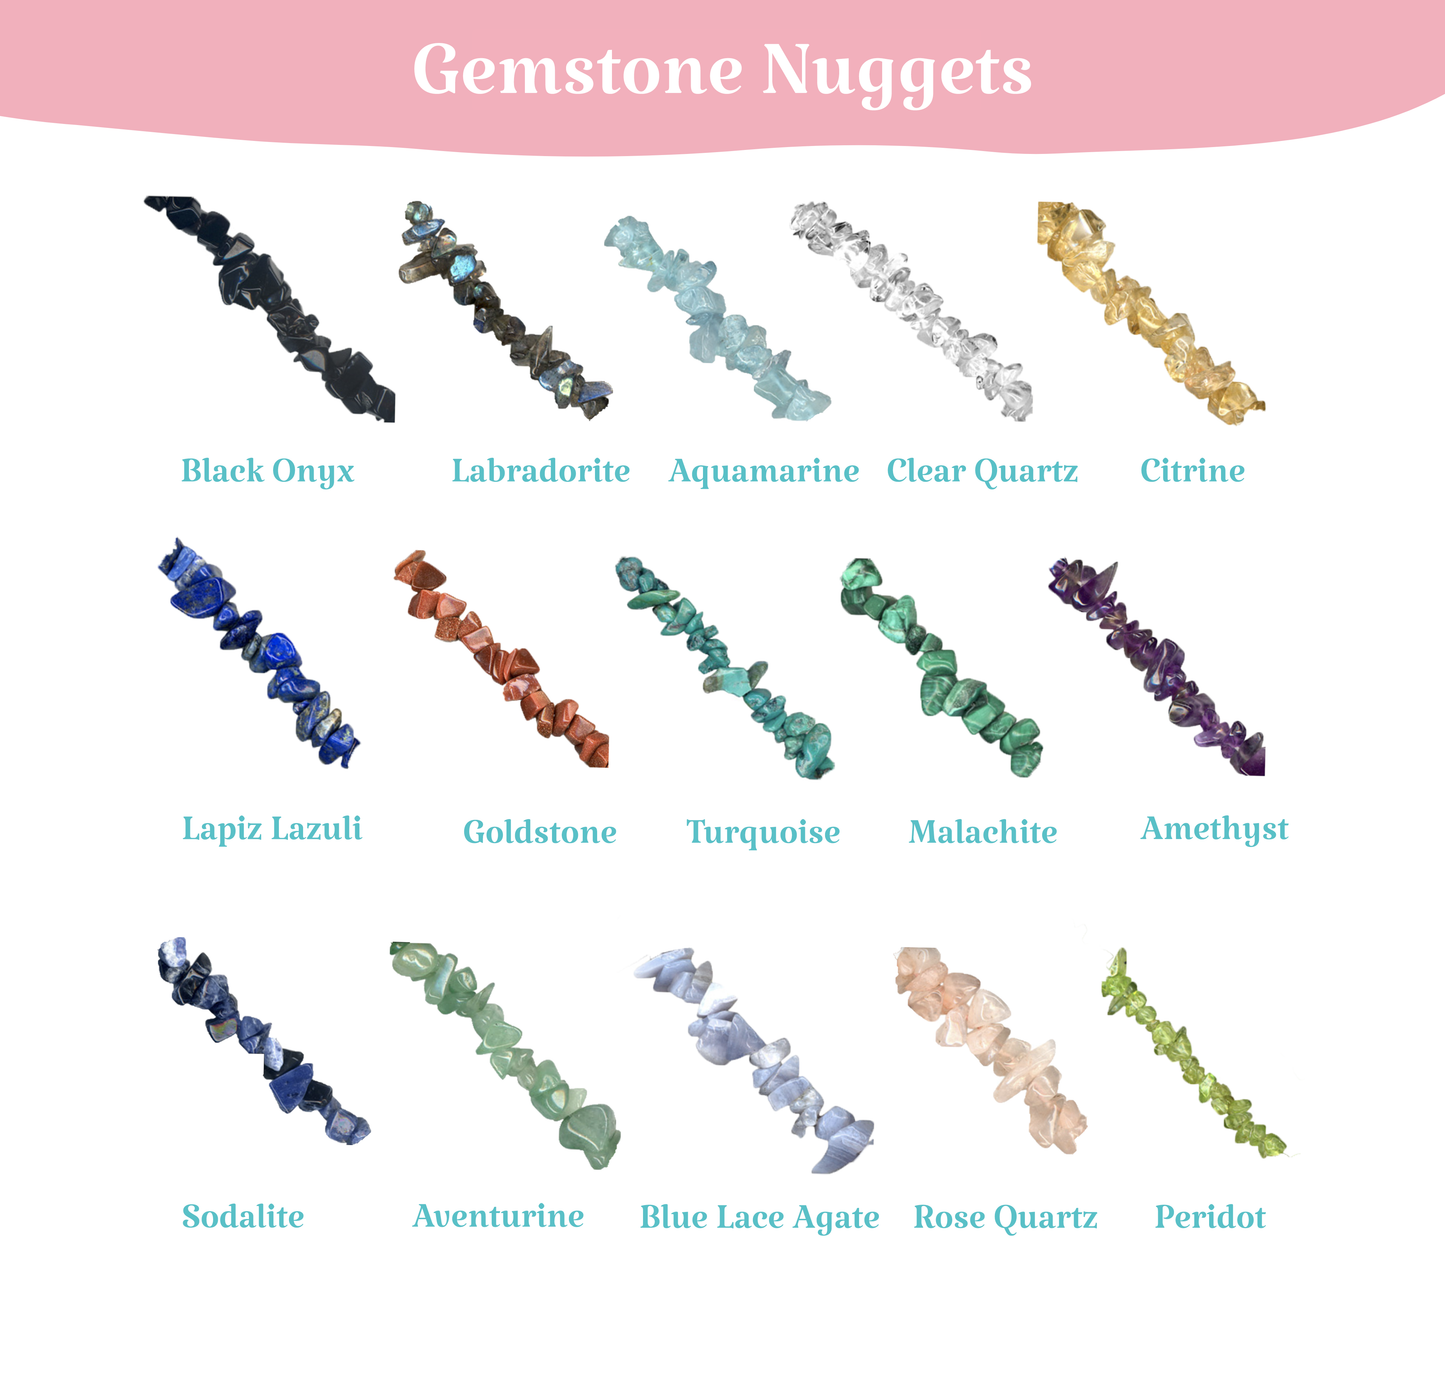 Constellation Necklace with Gemstone Nugget